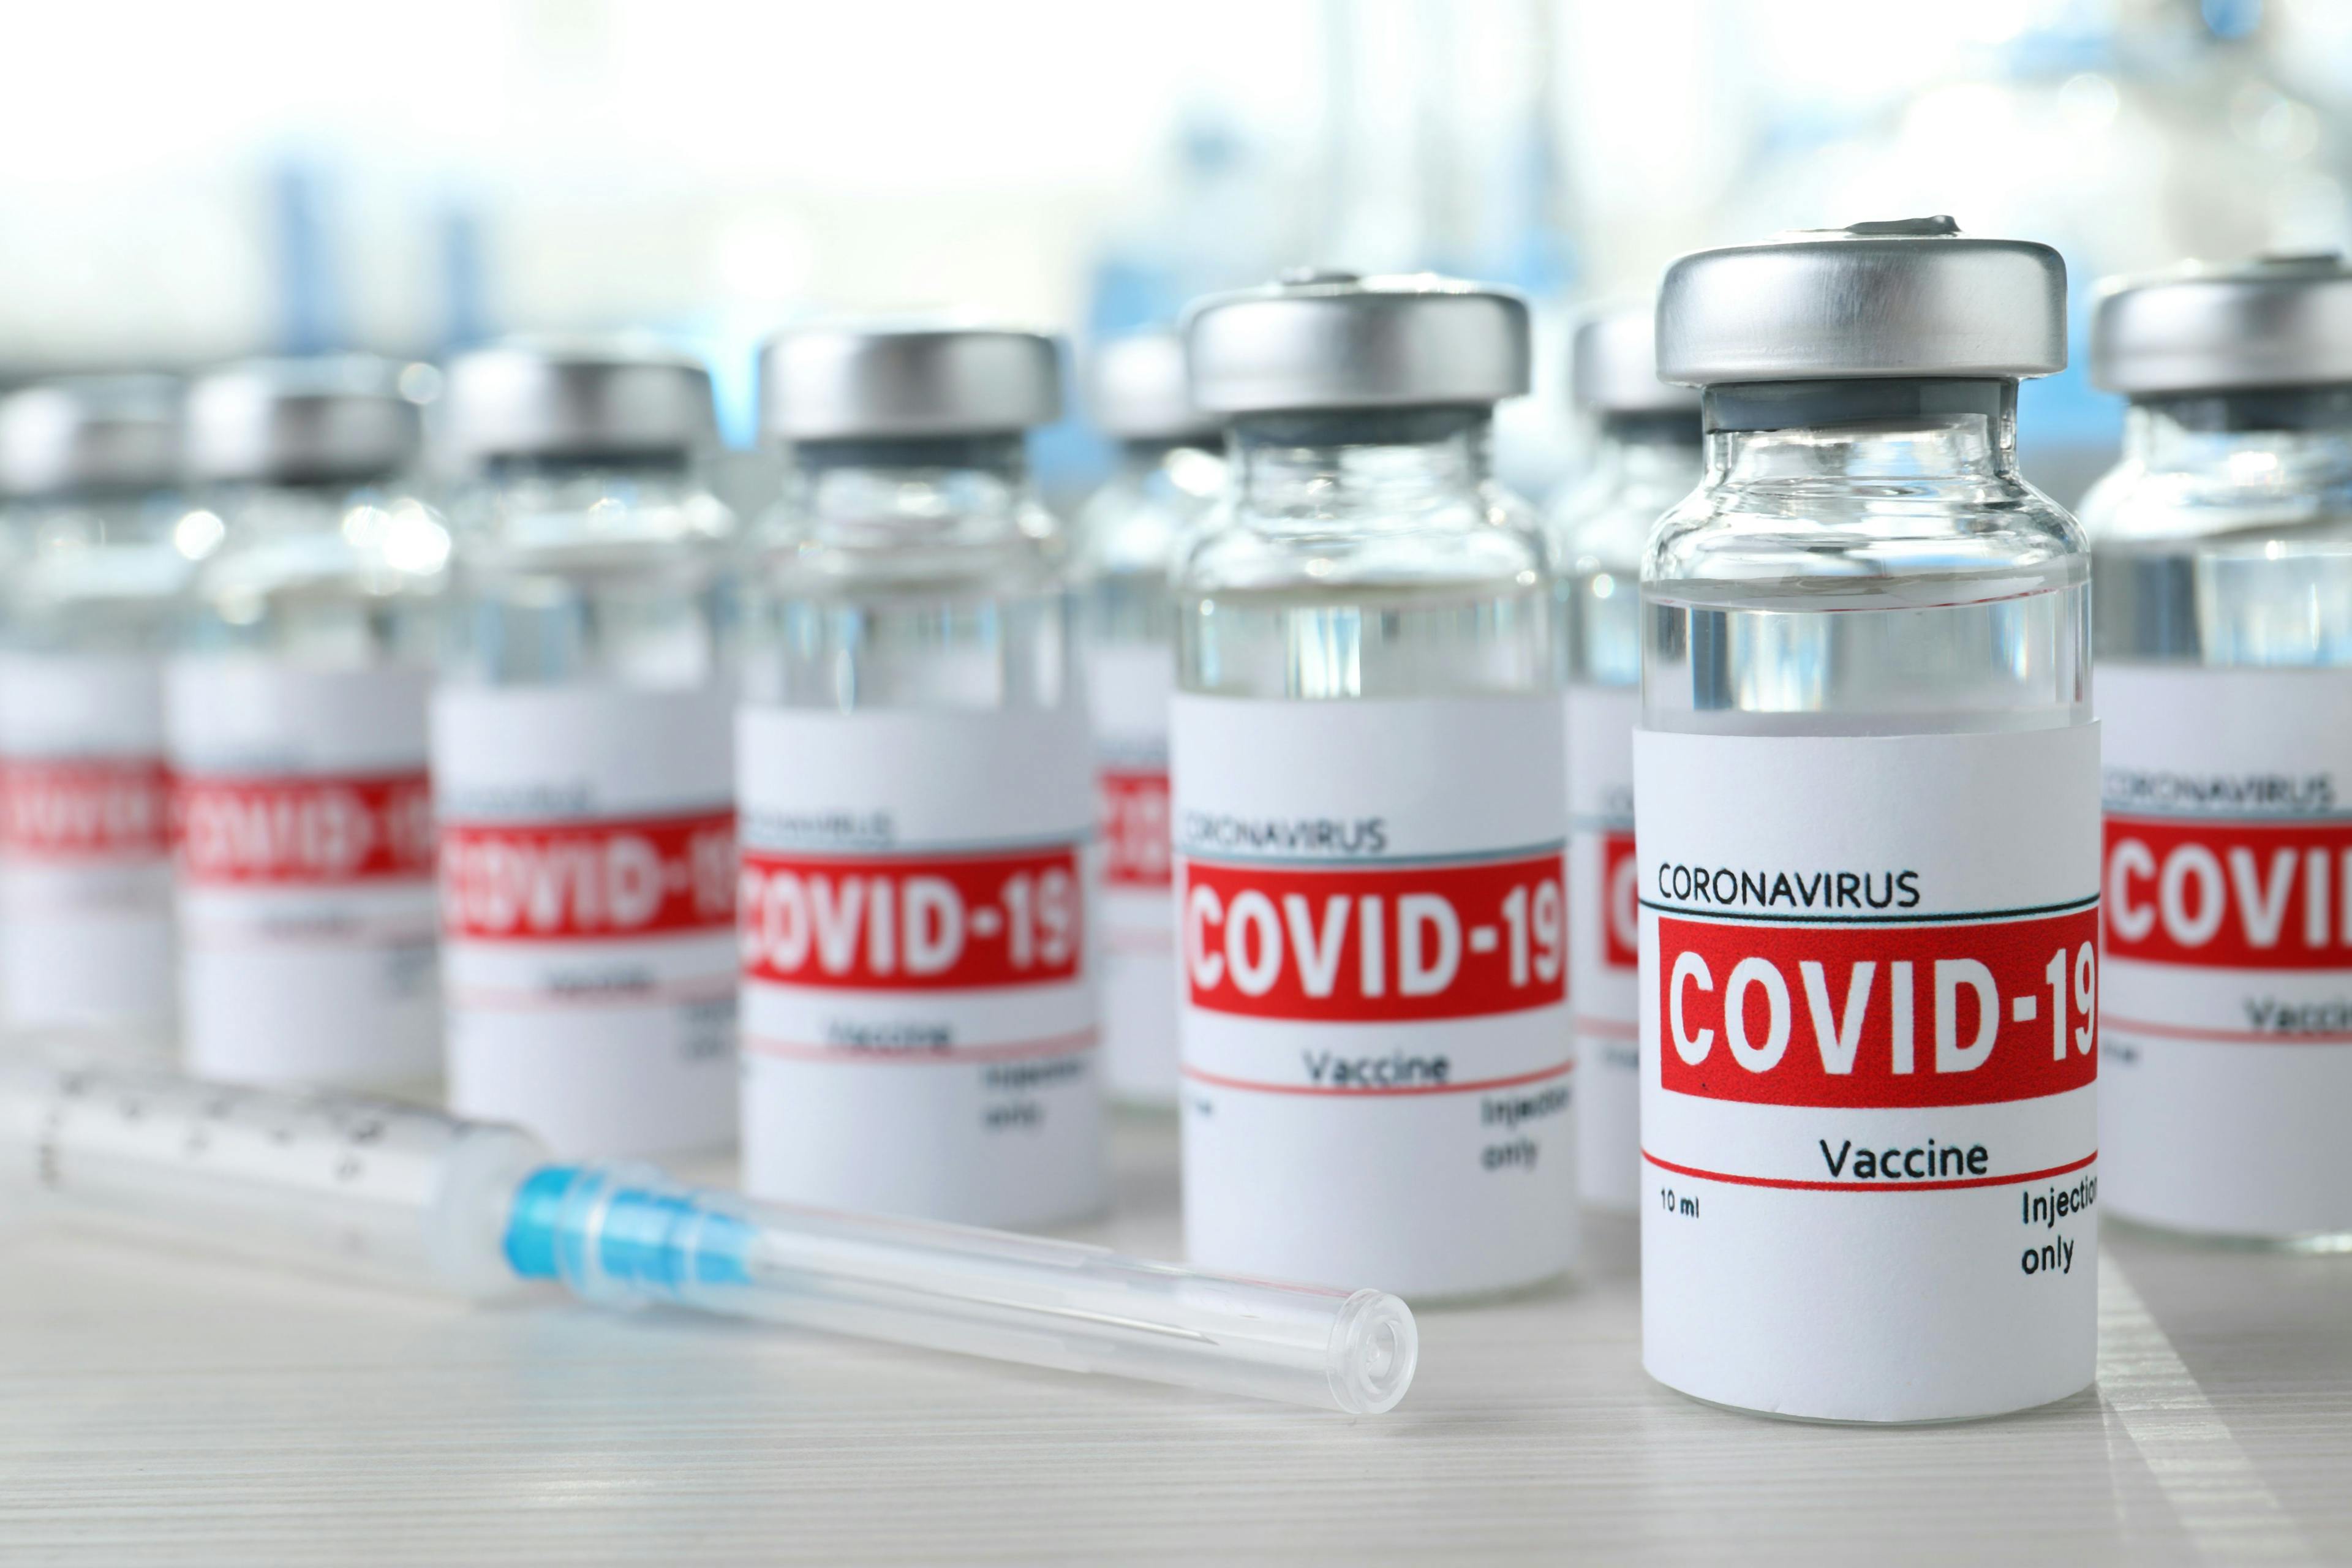  Supreme Court ruling blocks COVID-19 vaccine mandate for employers